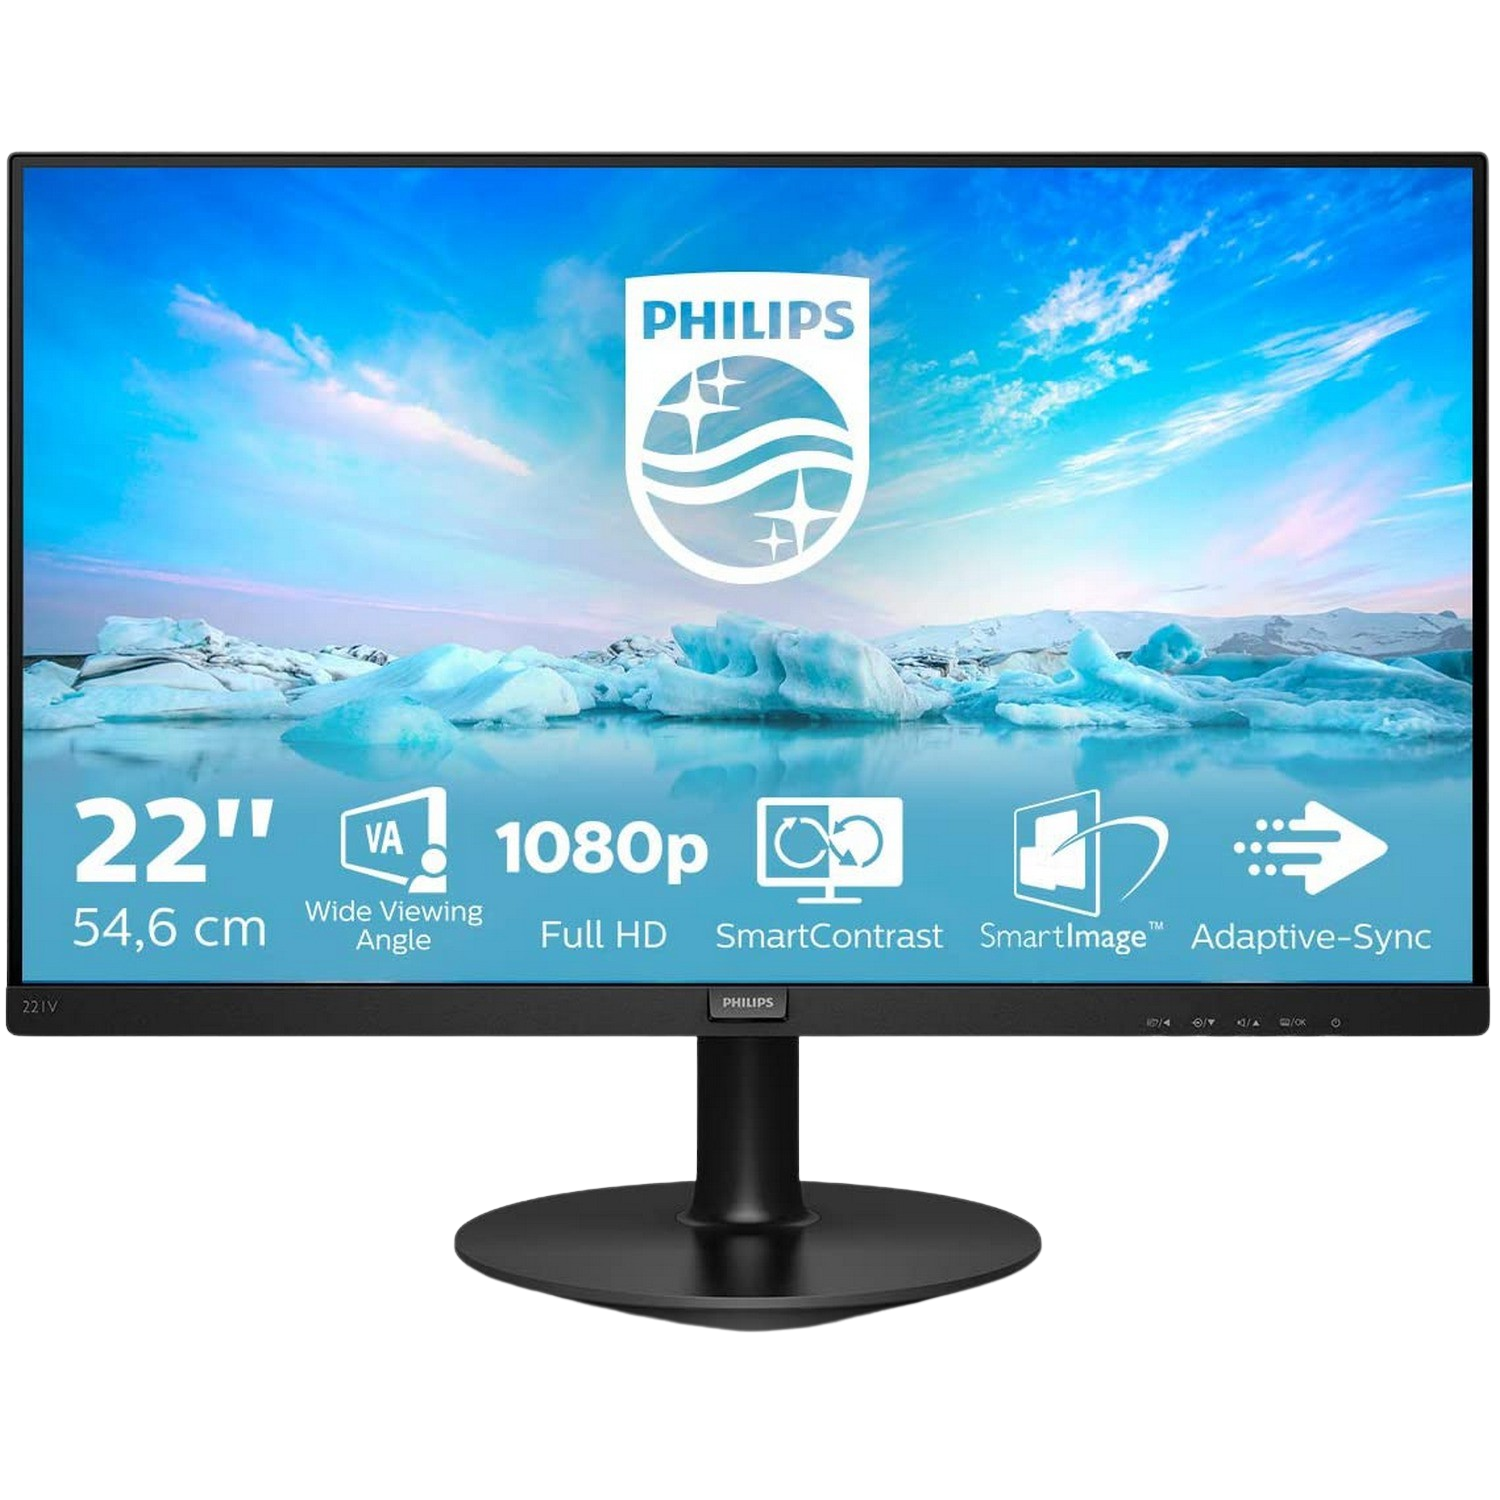 Philips Monitors 221v80022 fhd 75hz va flicker free vesa 1920x1080 200 cdm² dsub hdmi negro pc 546 cm 215 221v800 75 smartimage 221v8a01 21.5fhd 4 ms 21.5 22 5461cm